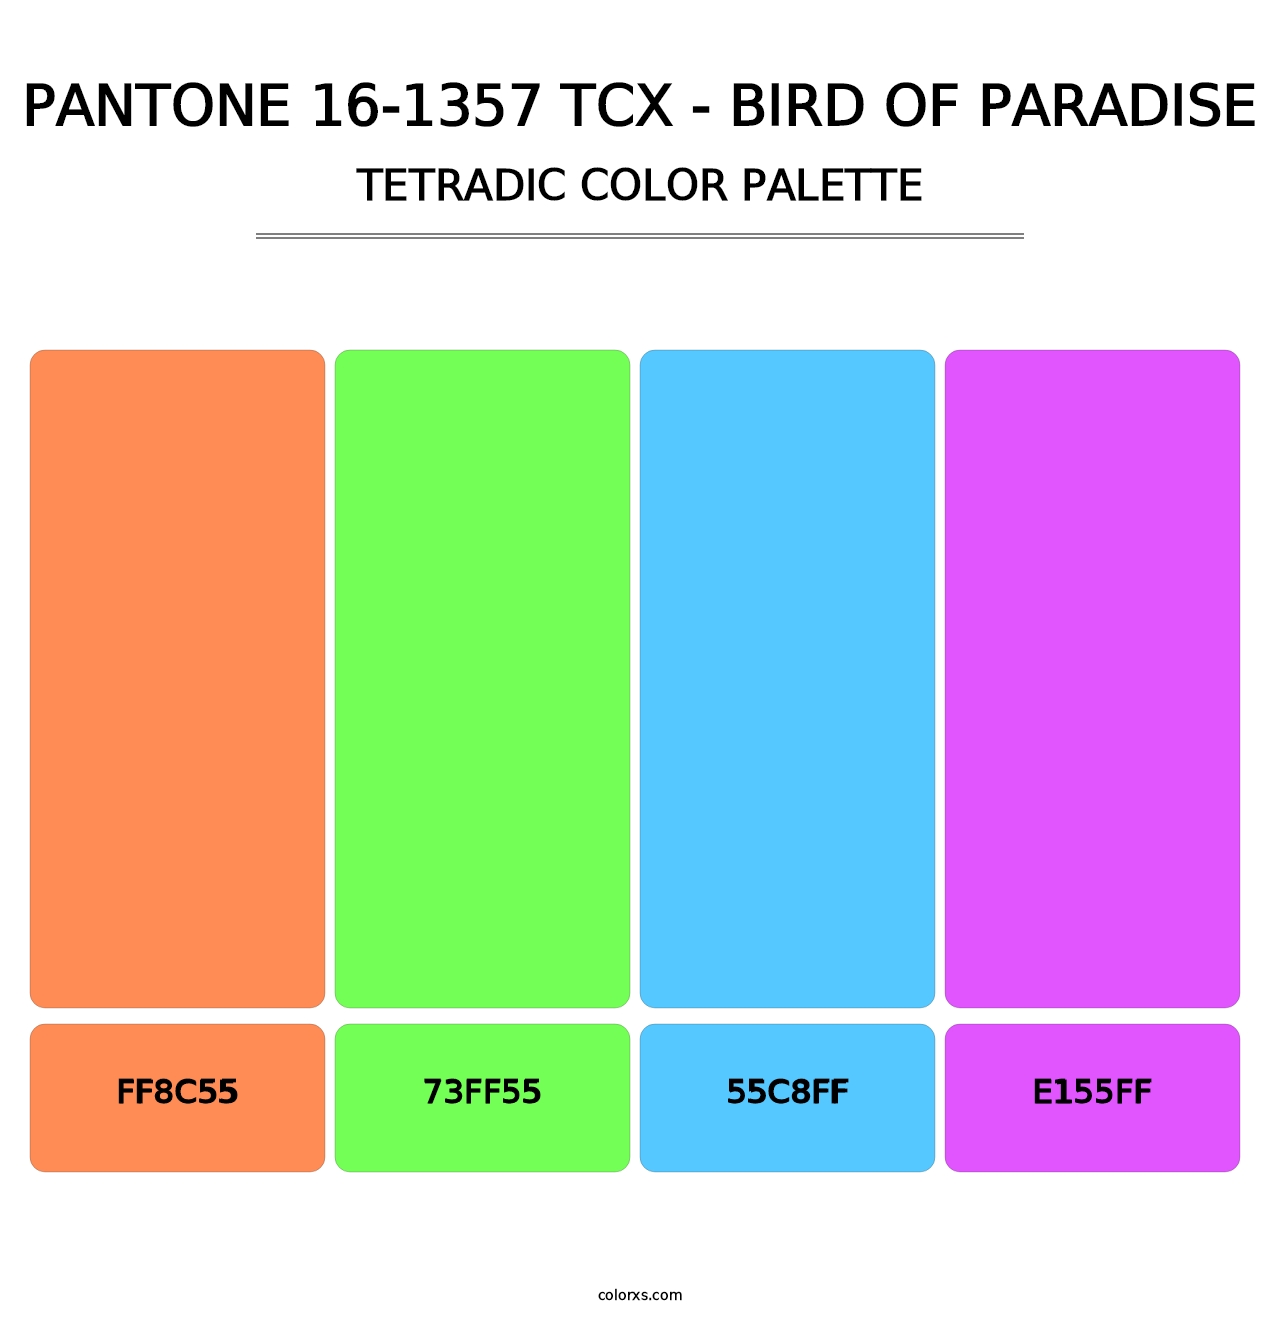 PANTONE 16-1357 TCX - Bird of Paradise - Tetradic Color Palette